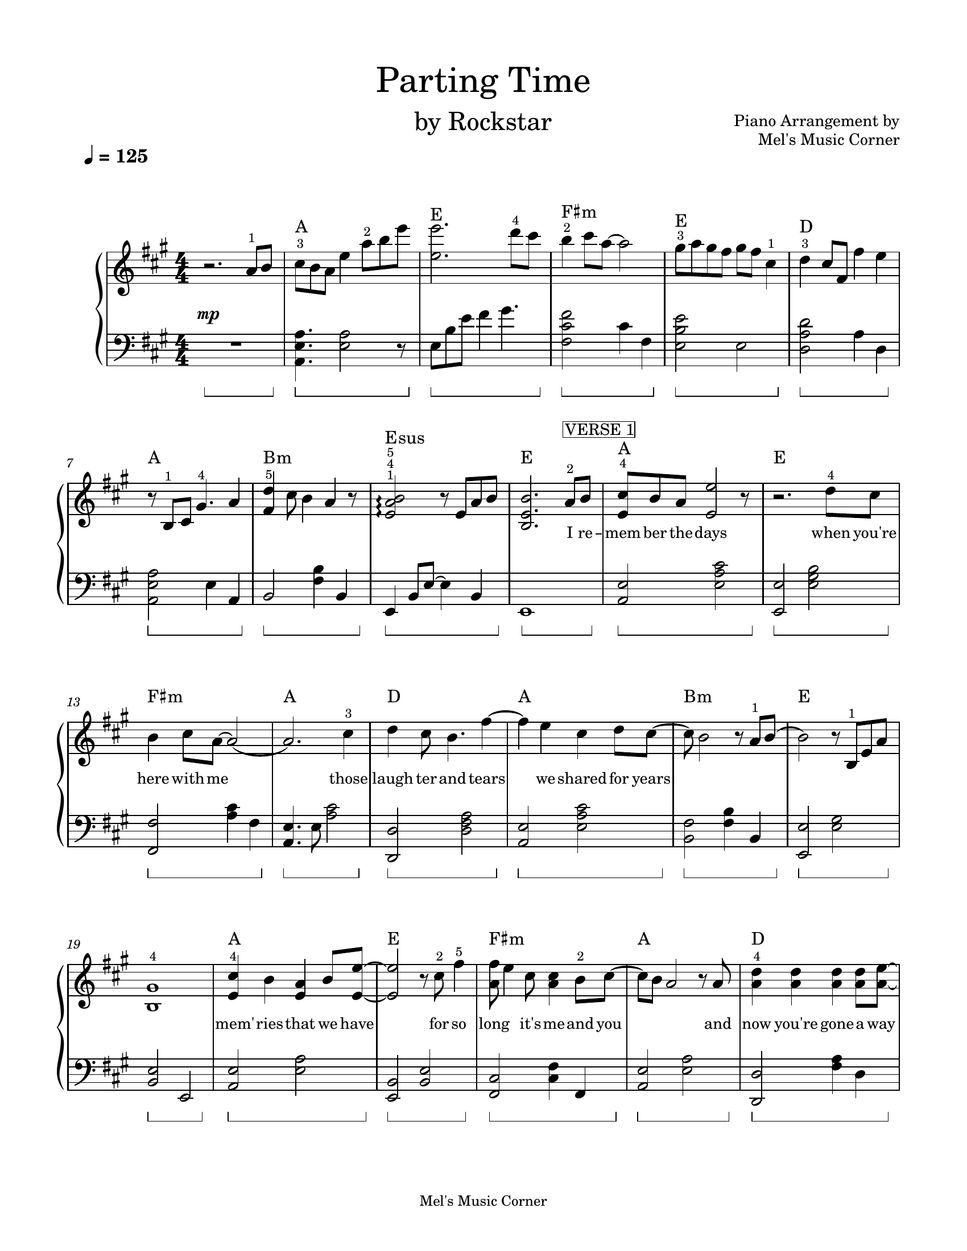 Rockstar - Parting Time (piano sheet music) by Mel's Music Corner